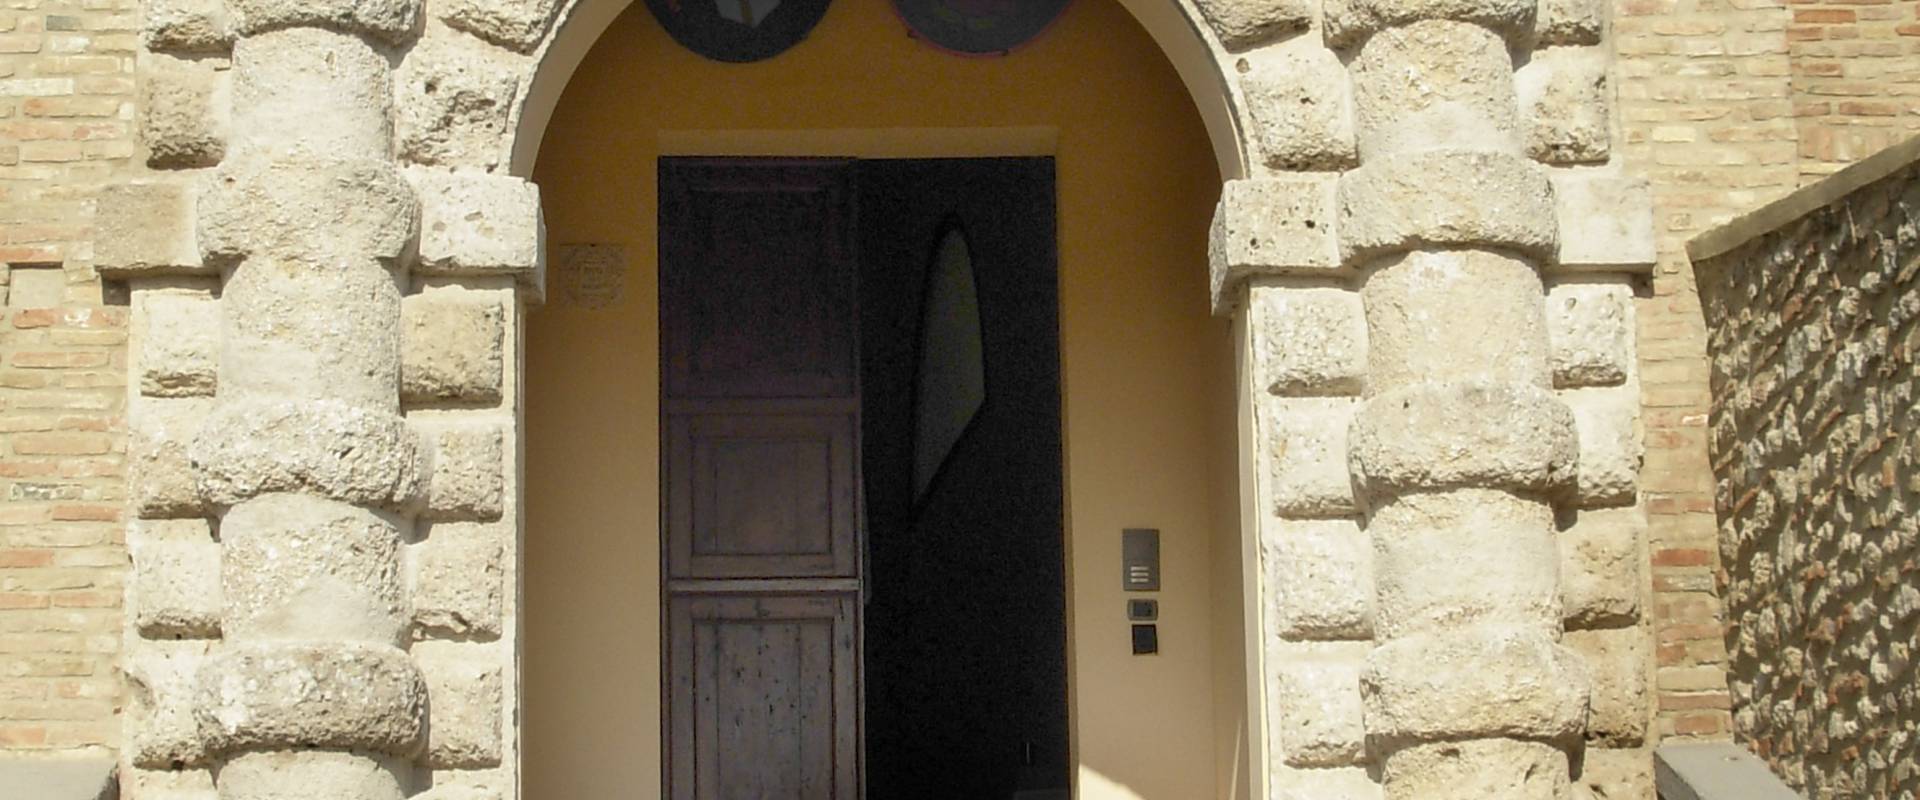 Porta ingresso rocca bertinoro photo by Ilicemonti50